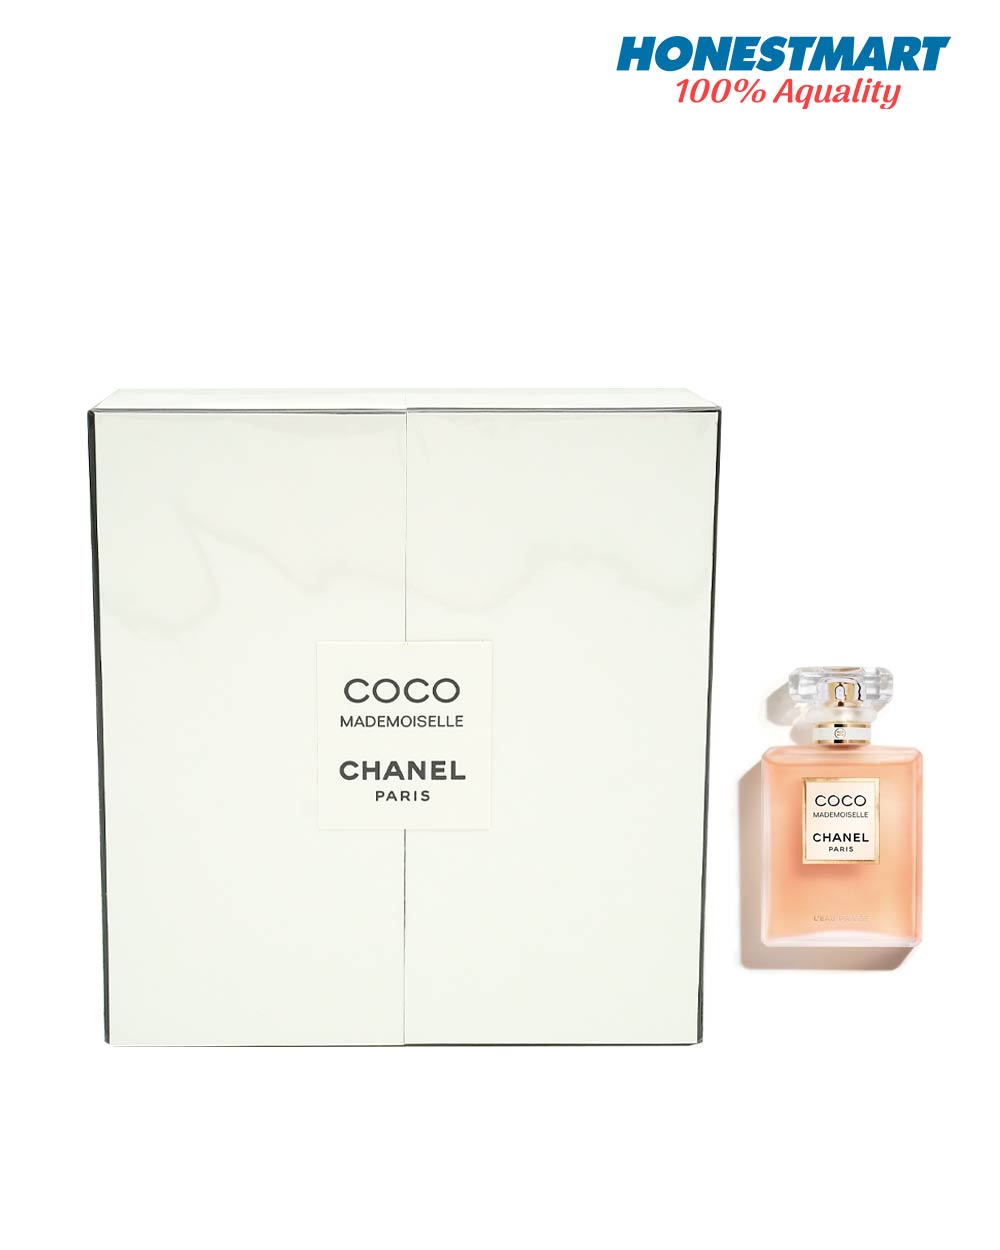 Nước hoa nữ Chanel CoCo Mademoiselle EDP 100ml - Tem Macys Honestmart